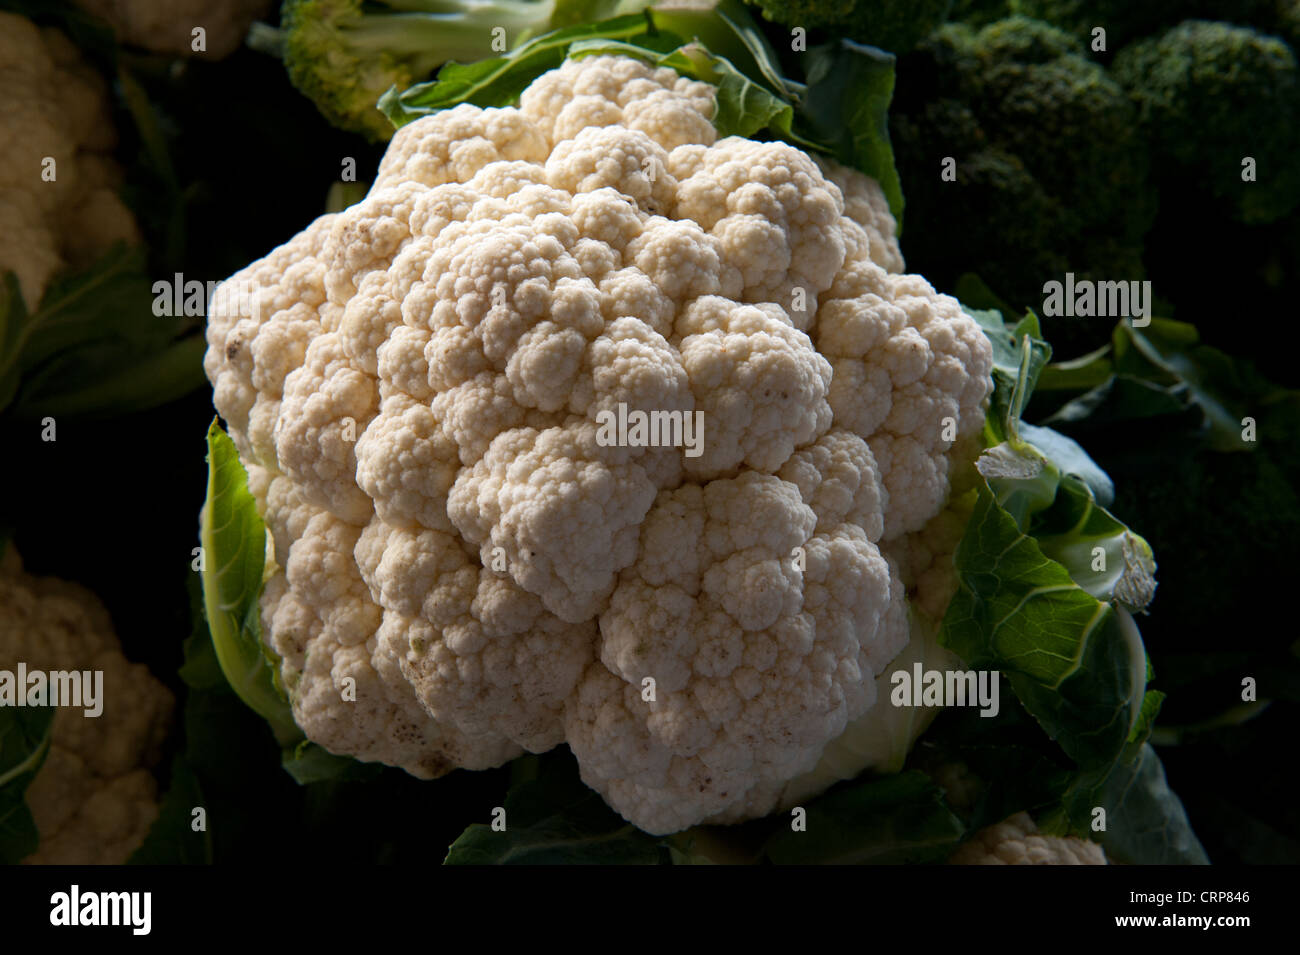 A head of white cauliflower (Brassica oleracea L. var. botrytis) in an Italian market Stock Photo